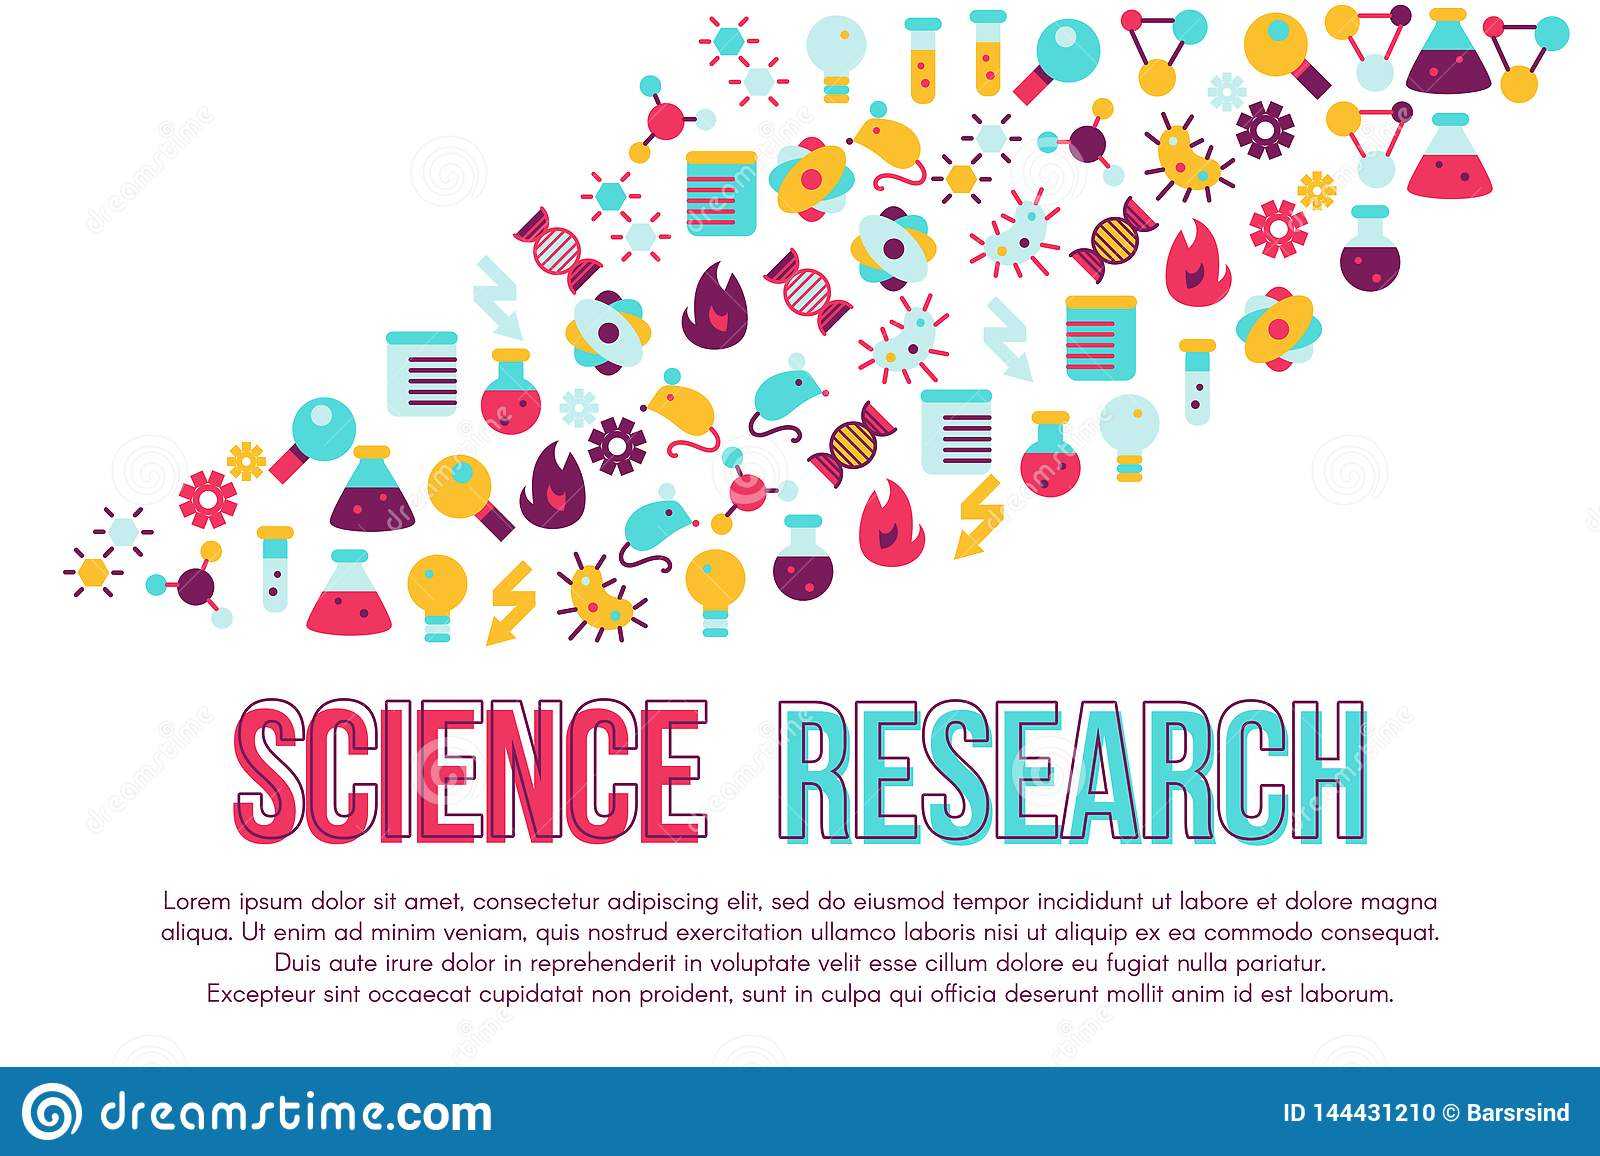 Science Fair Word Concept Banner Design Stock Illustration Inside Science Fair Banner Template